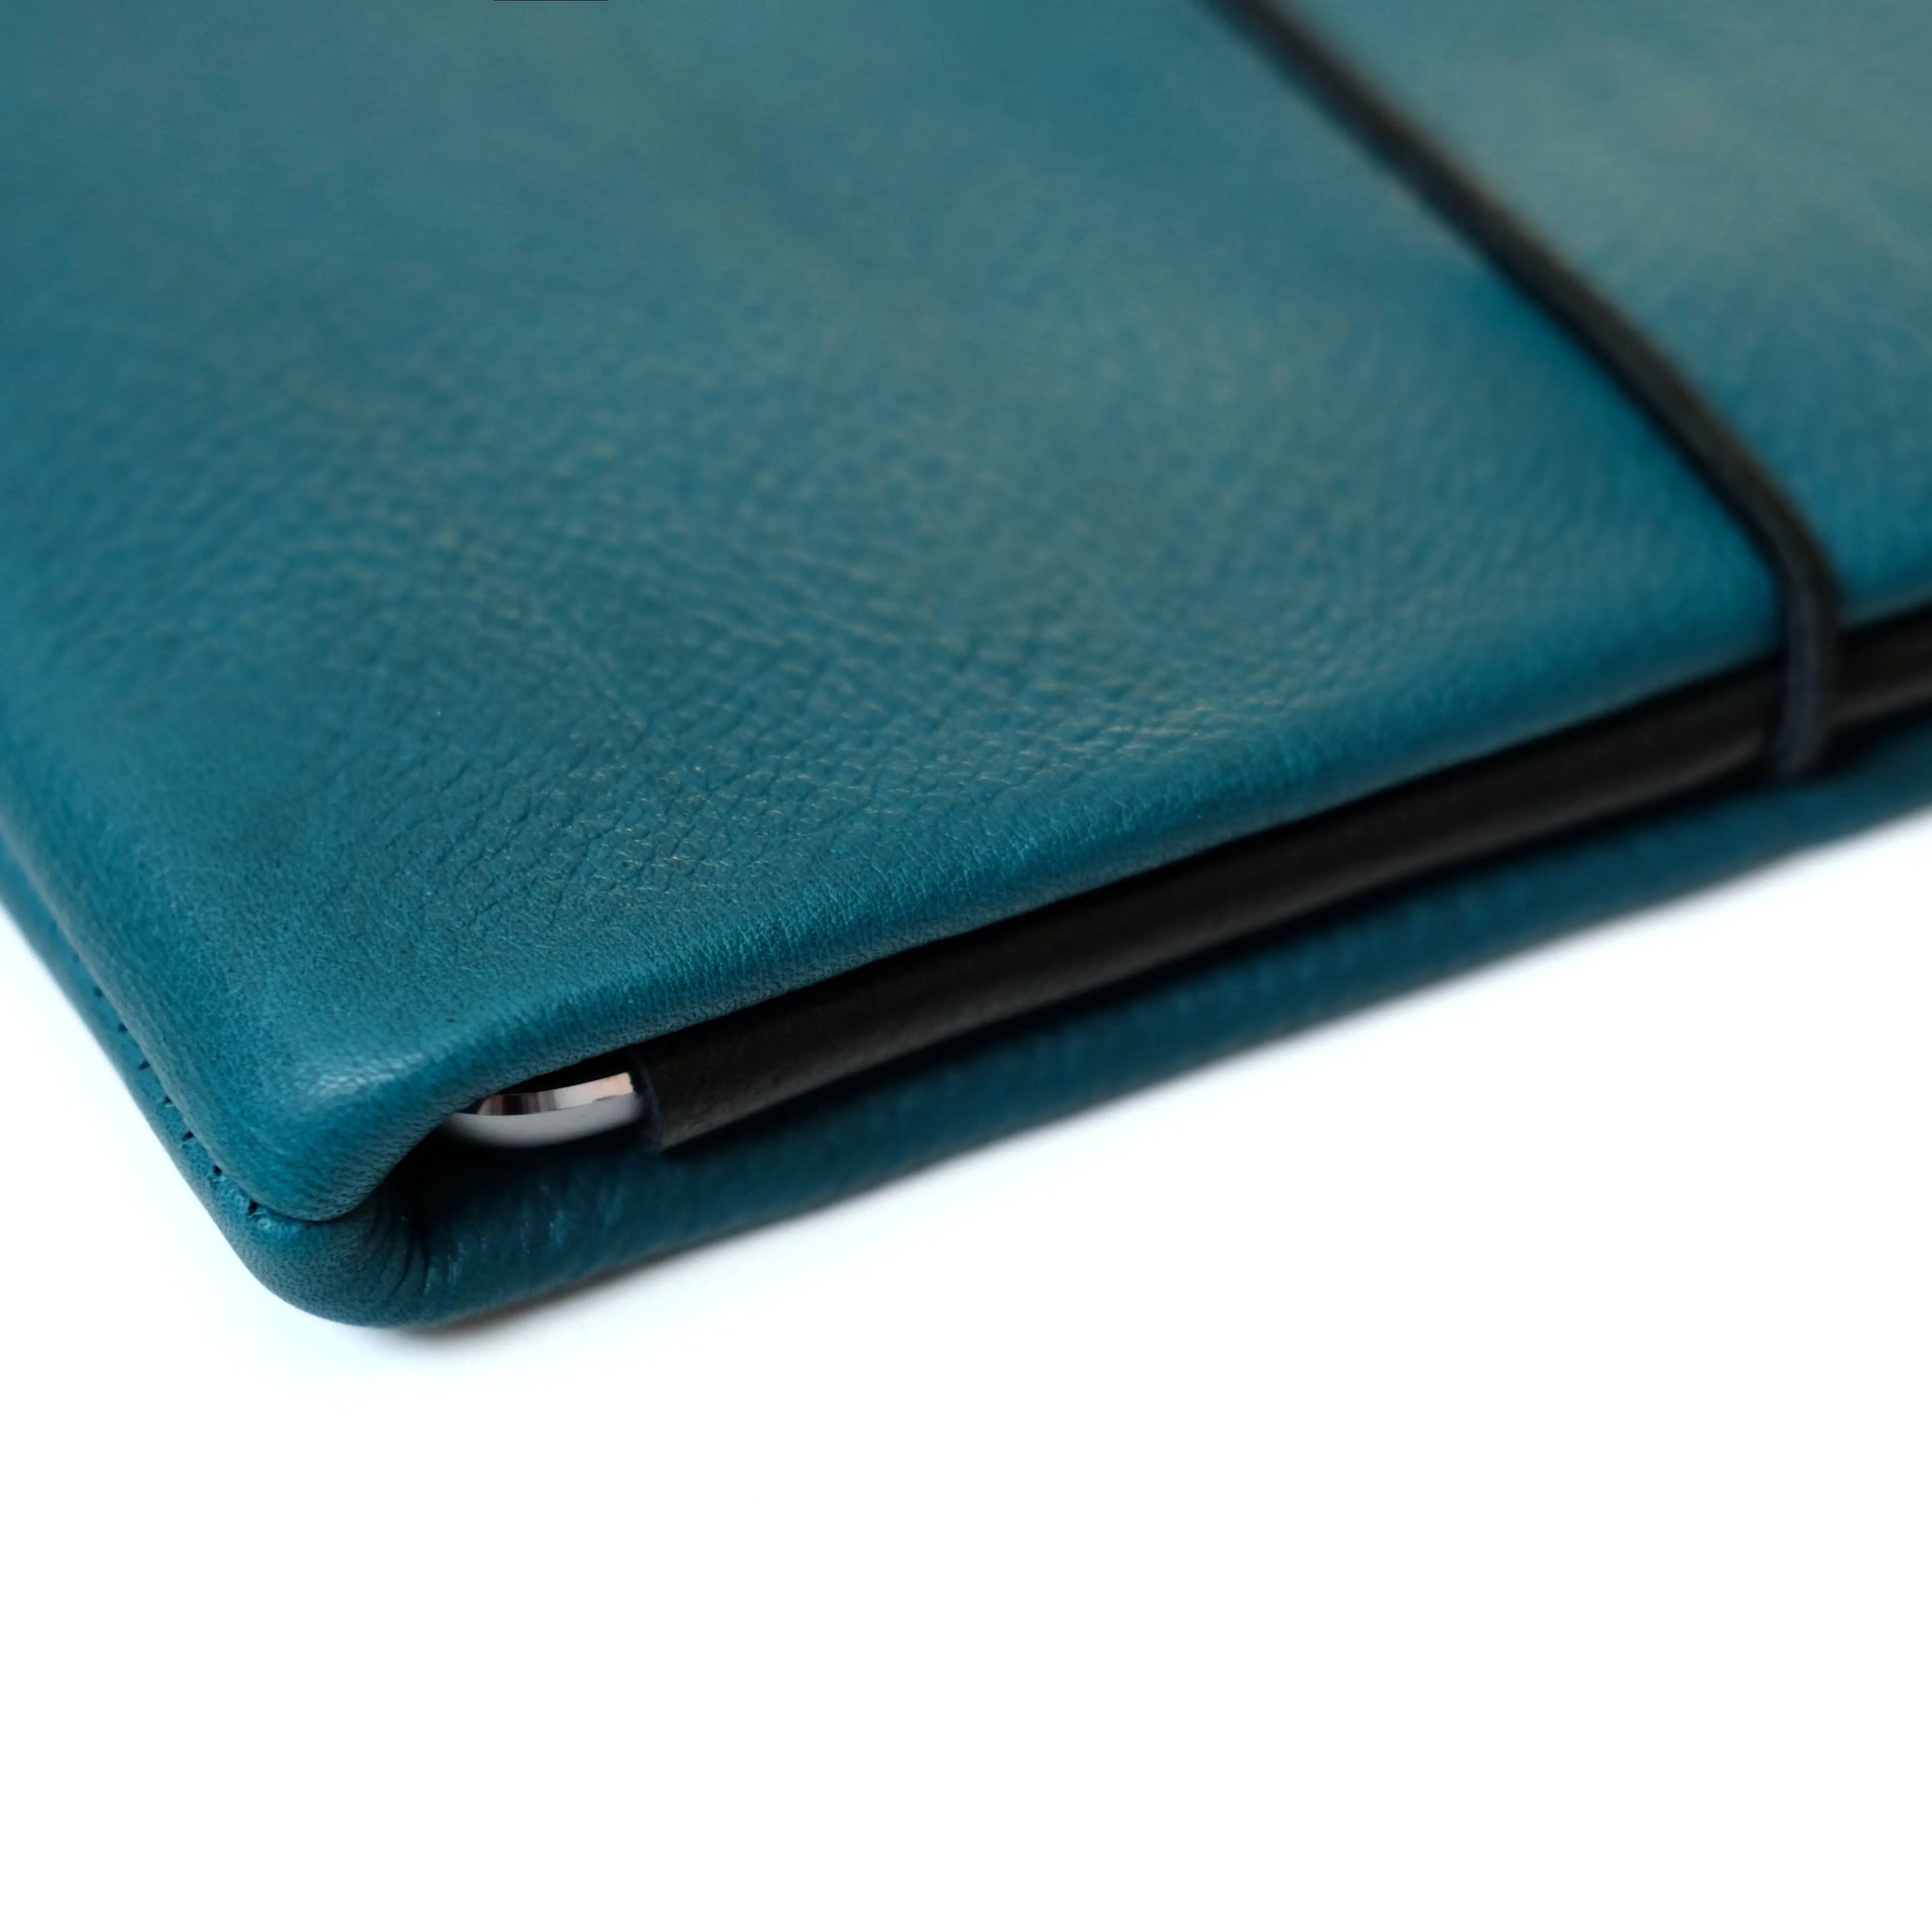 Lederhülle für dein iPad aus petrolfrabenem Leder mit schwarzer Lederklappe